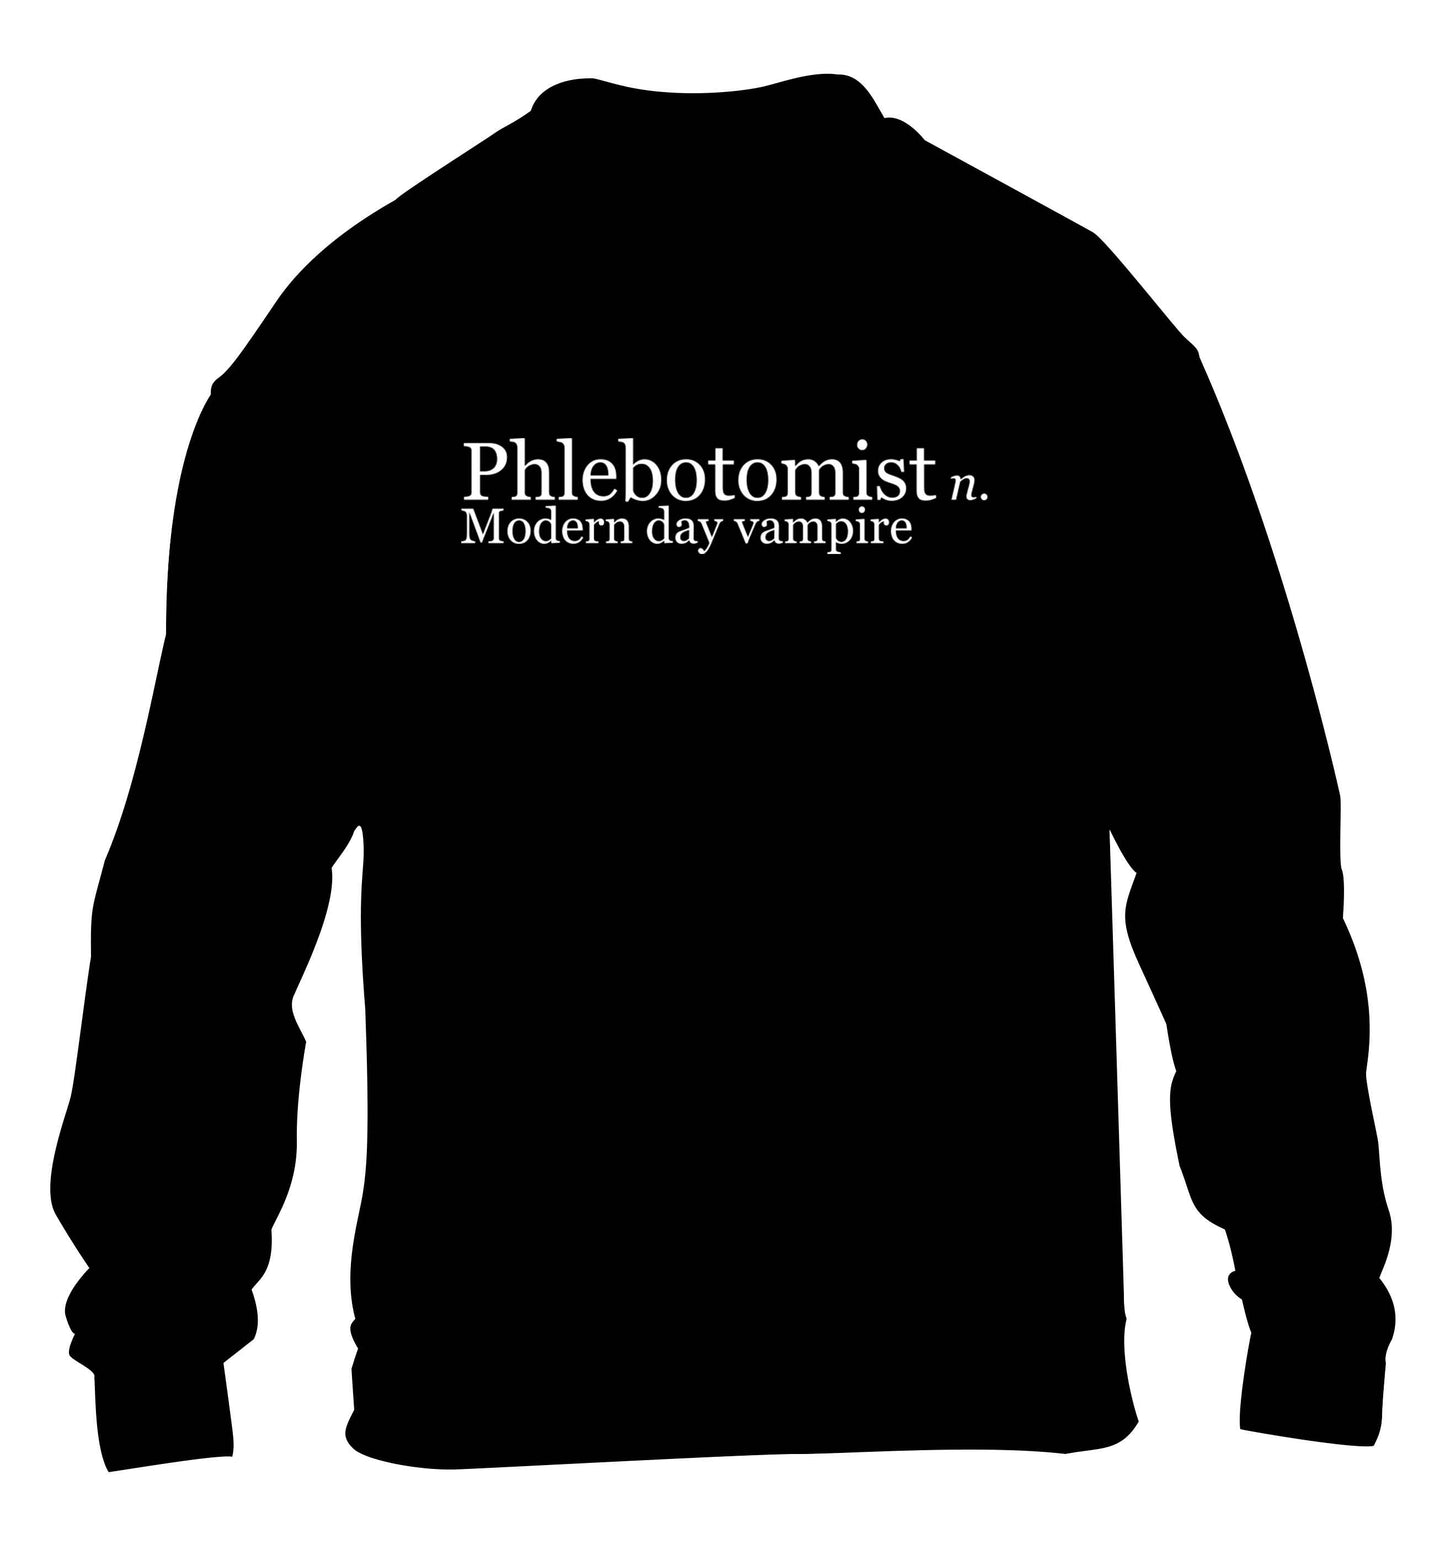 Phlebotomist - Modern day vampire children's black sweater 12-13 Years